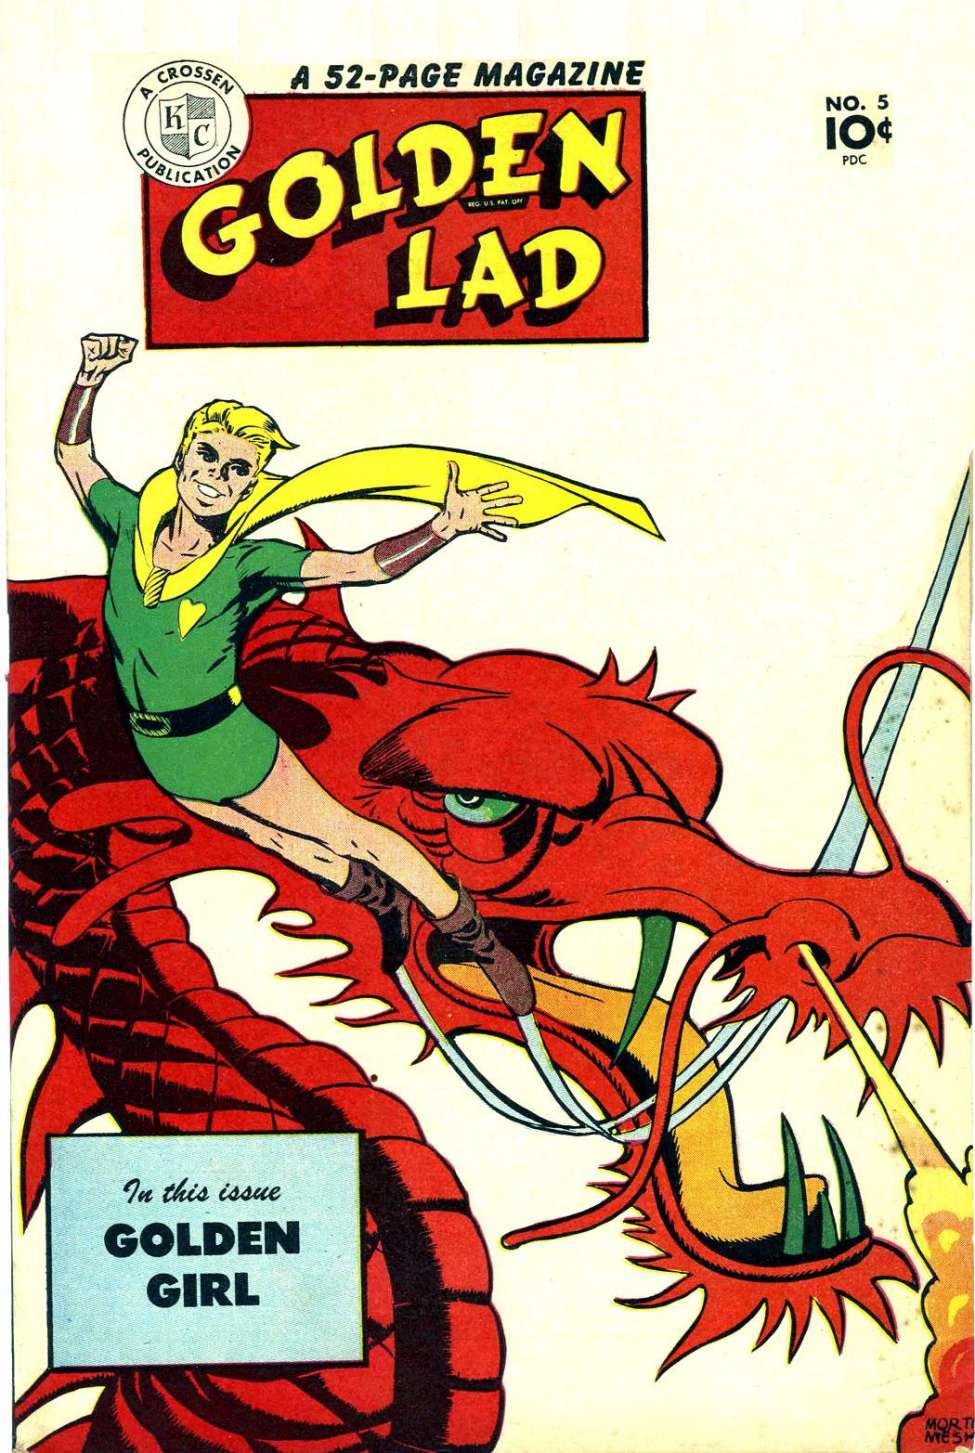 Comic Book Cover For Golden Lad 5 (paper/fiche)